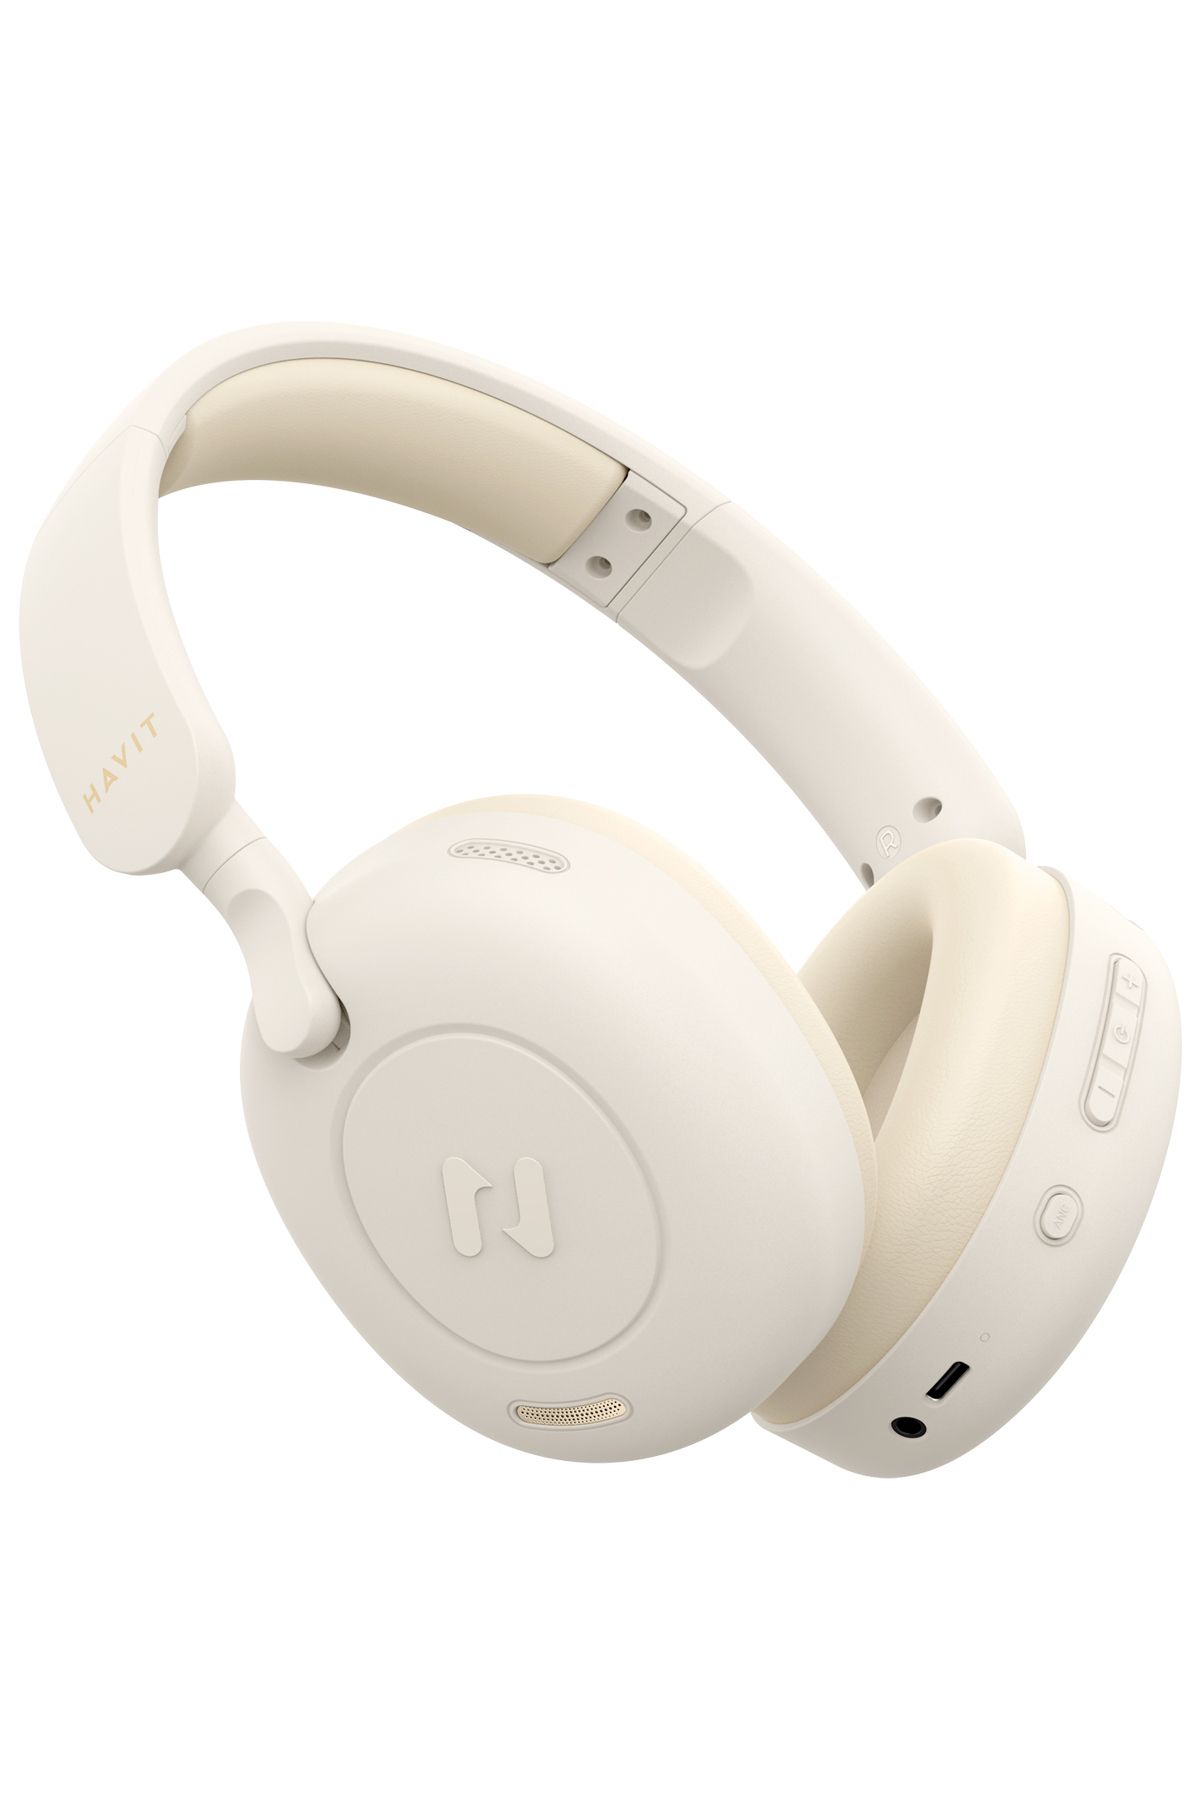 Havit H655bt Hybrid Anc Kulaküstü Bluetooth Kulaklık - 60 Saat Batarya, Enc, Anc, Çift Cihaz Desteği